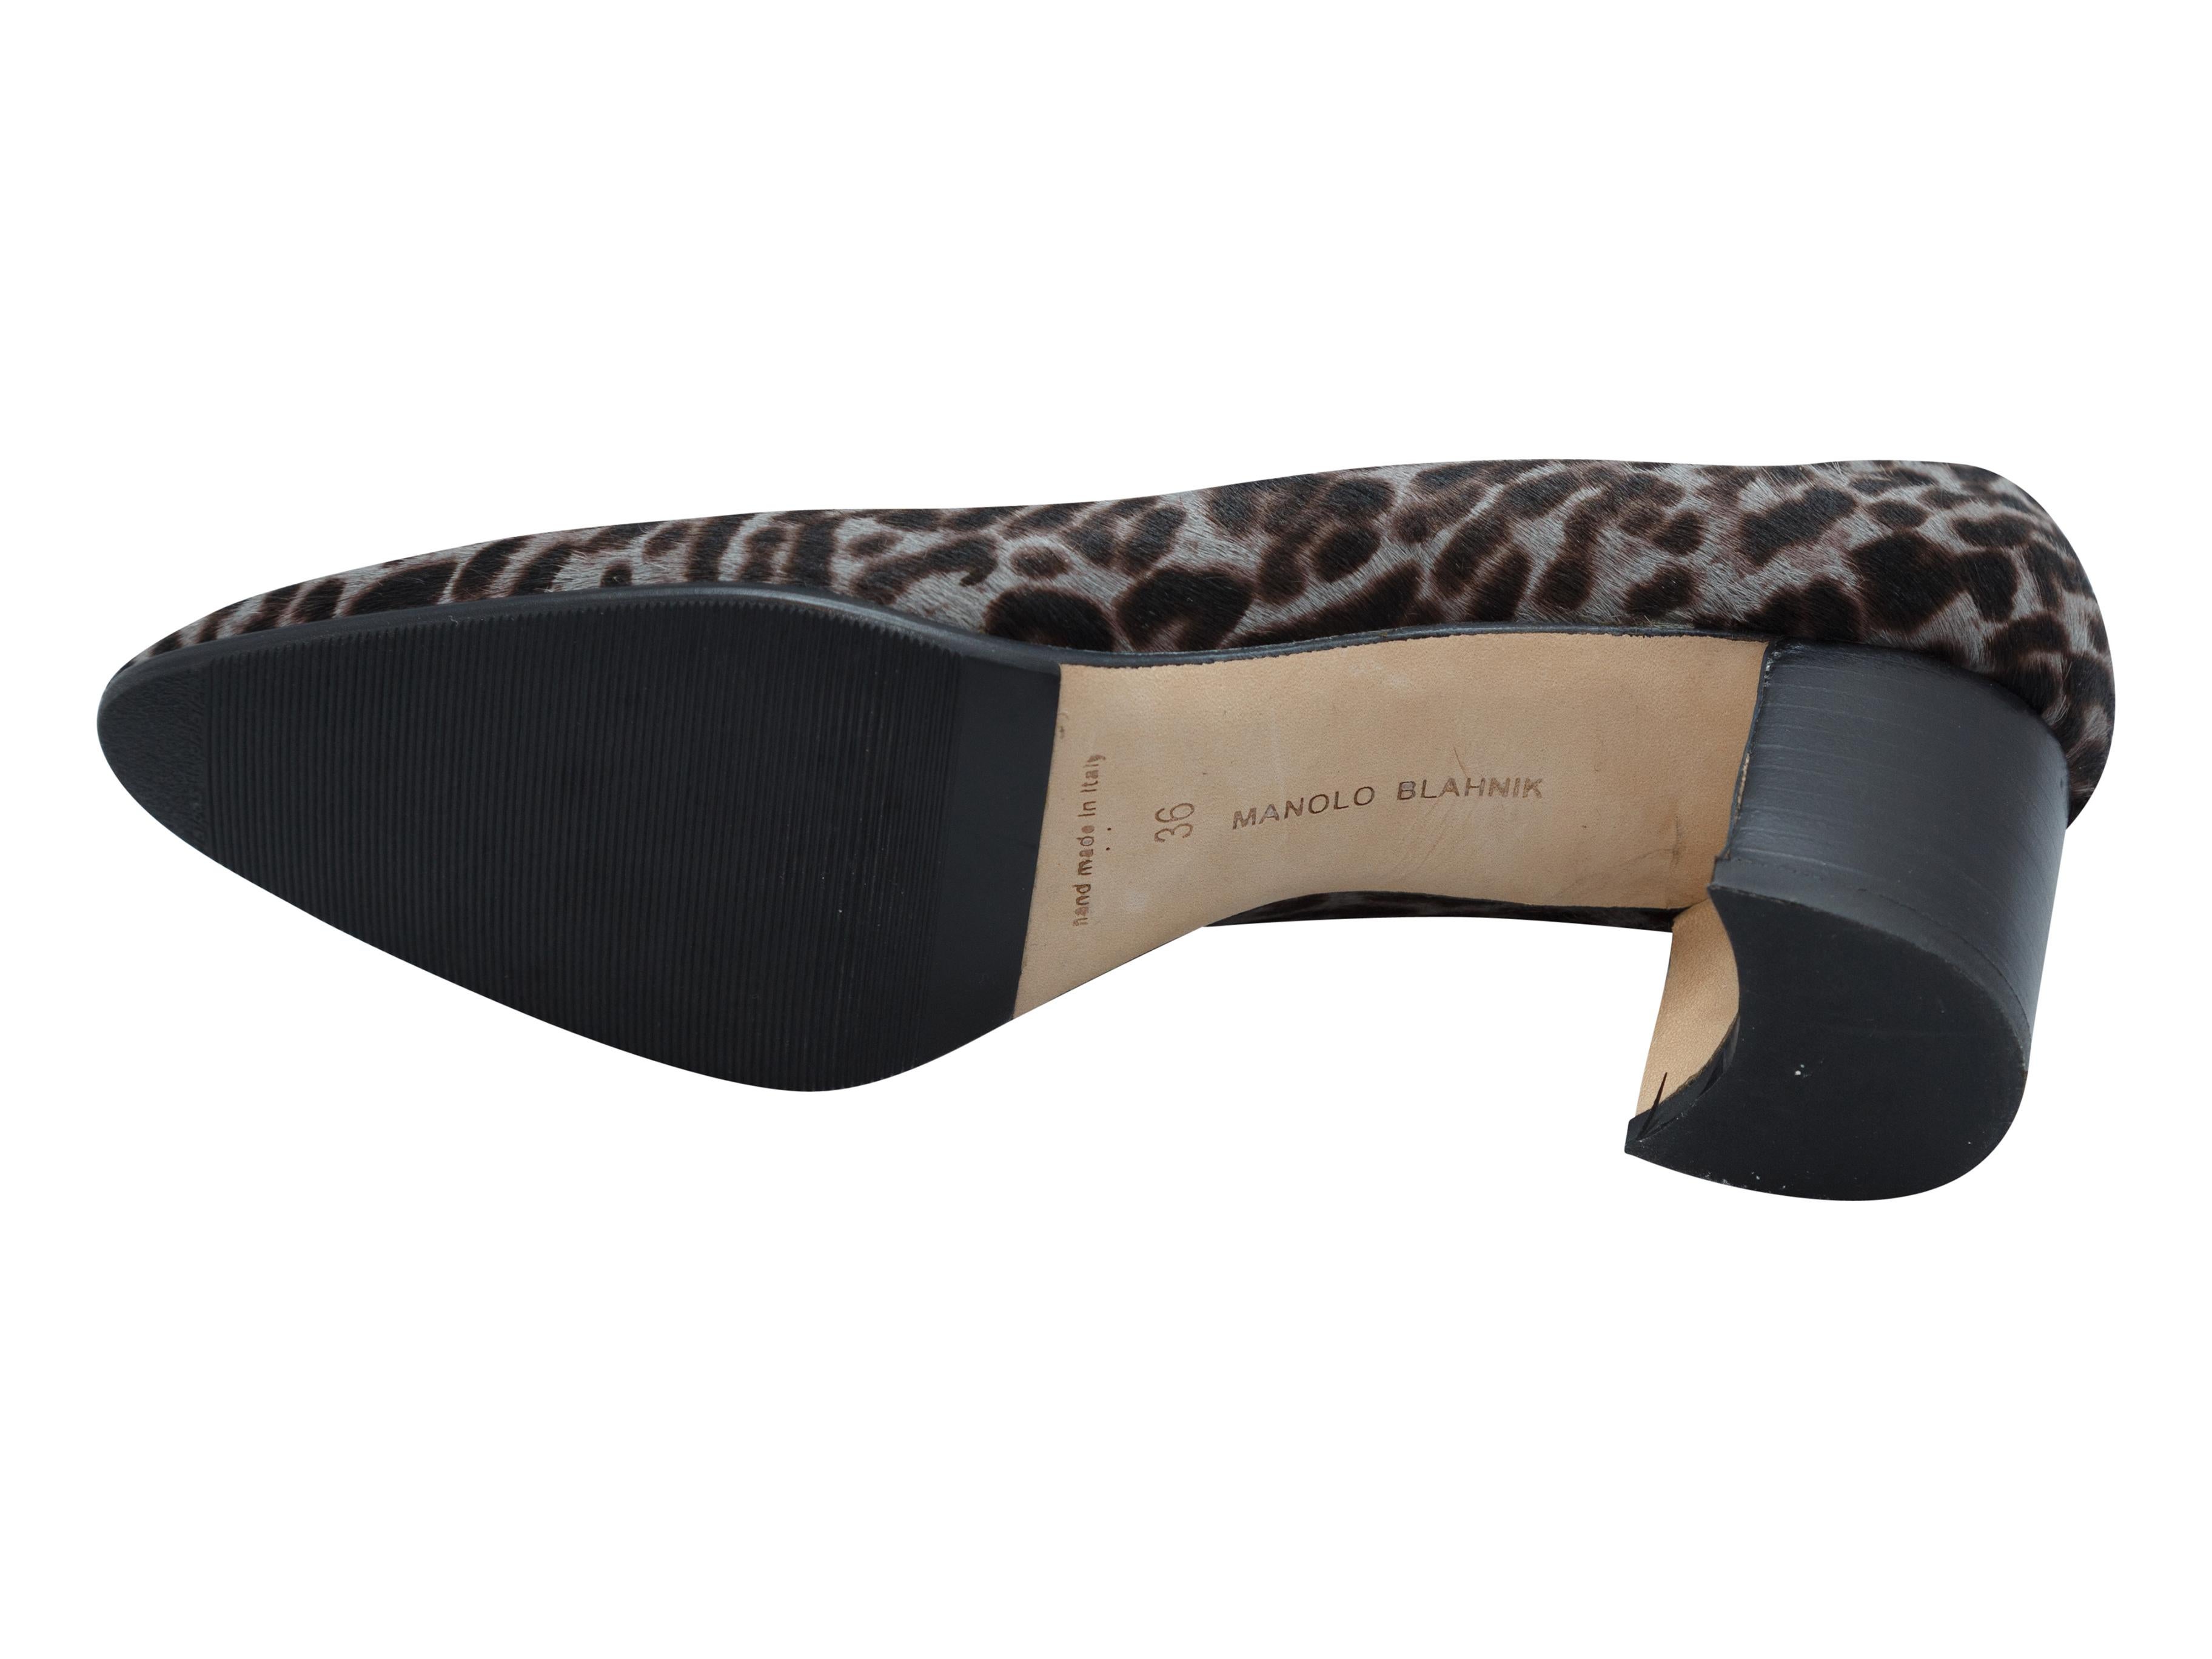 Product details: Grey and brown leopard print ponyhair pumps by Manolo Blahnik. Slip-on style. Block heels. Designer size 36. 2.13